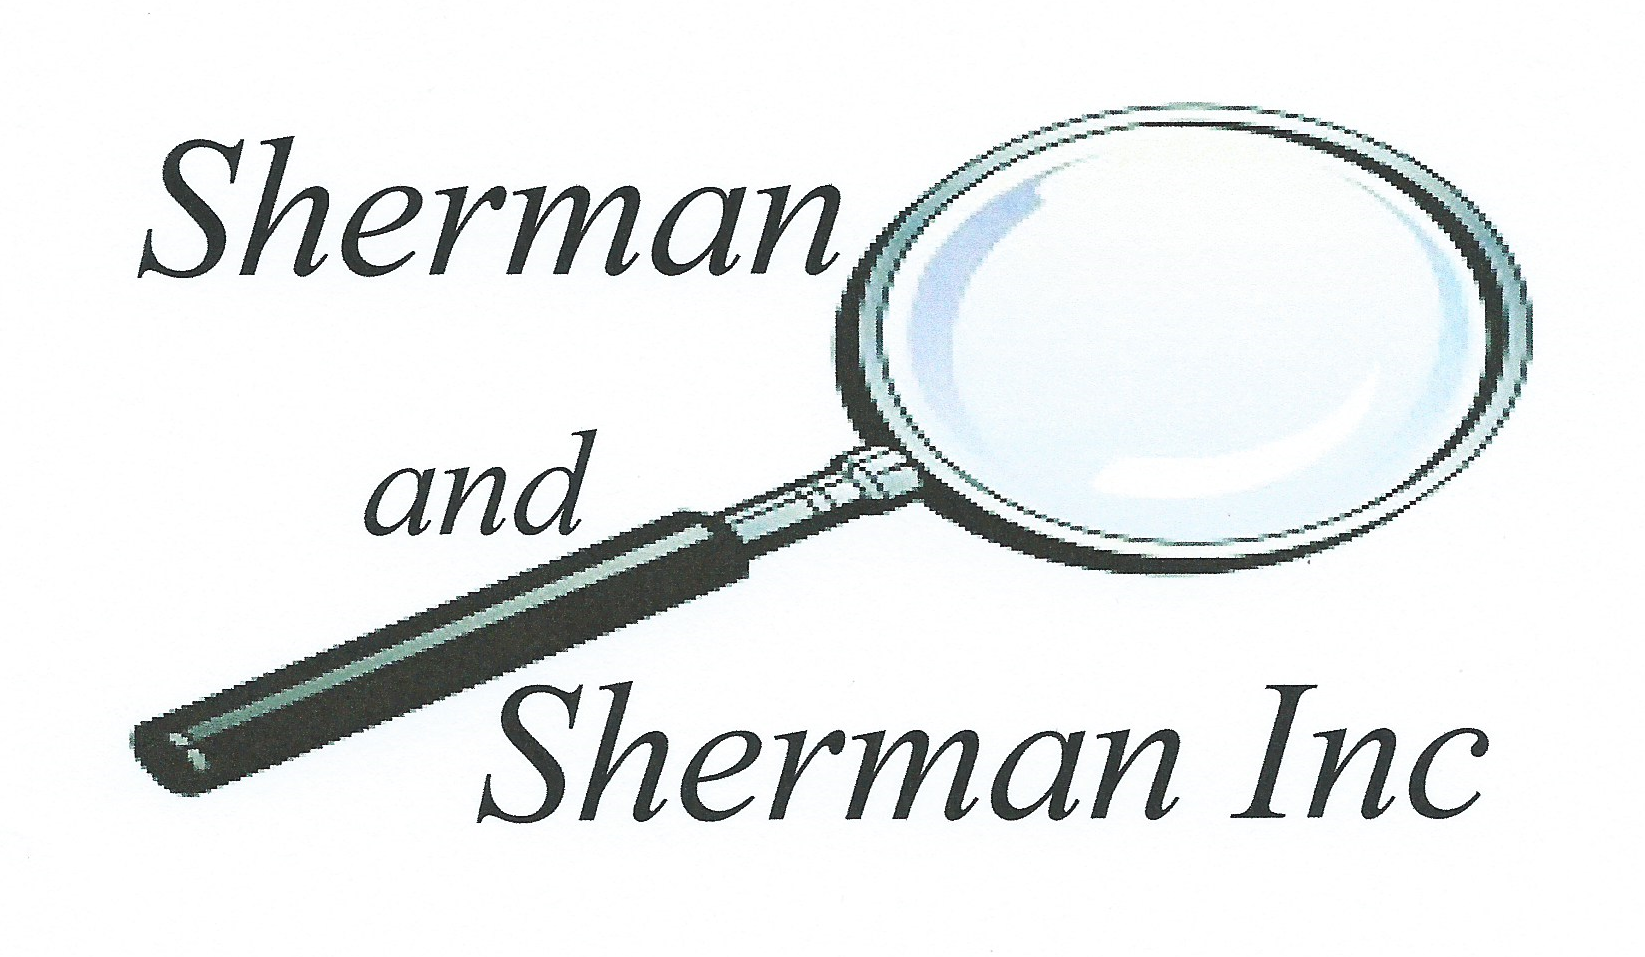 Sherman and Sherman